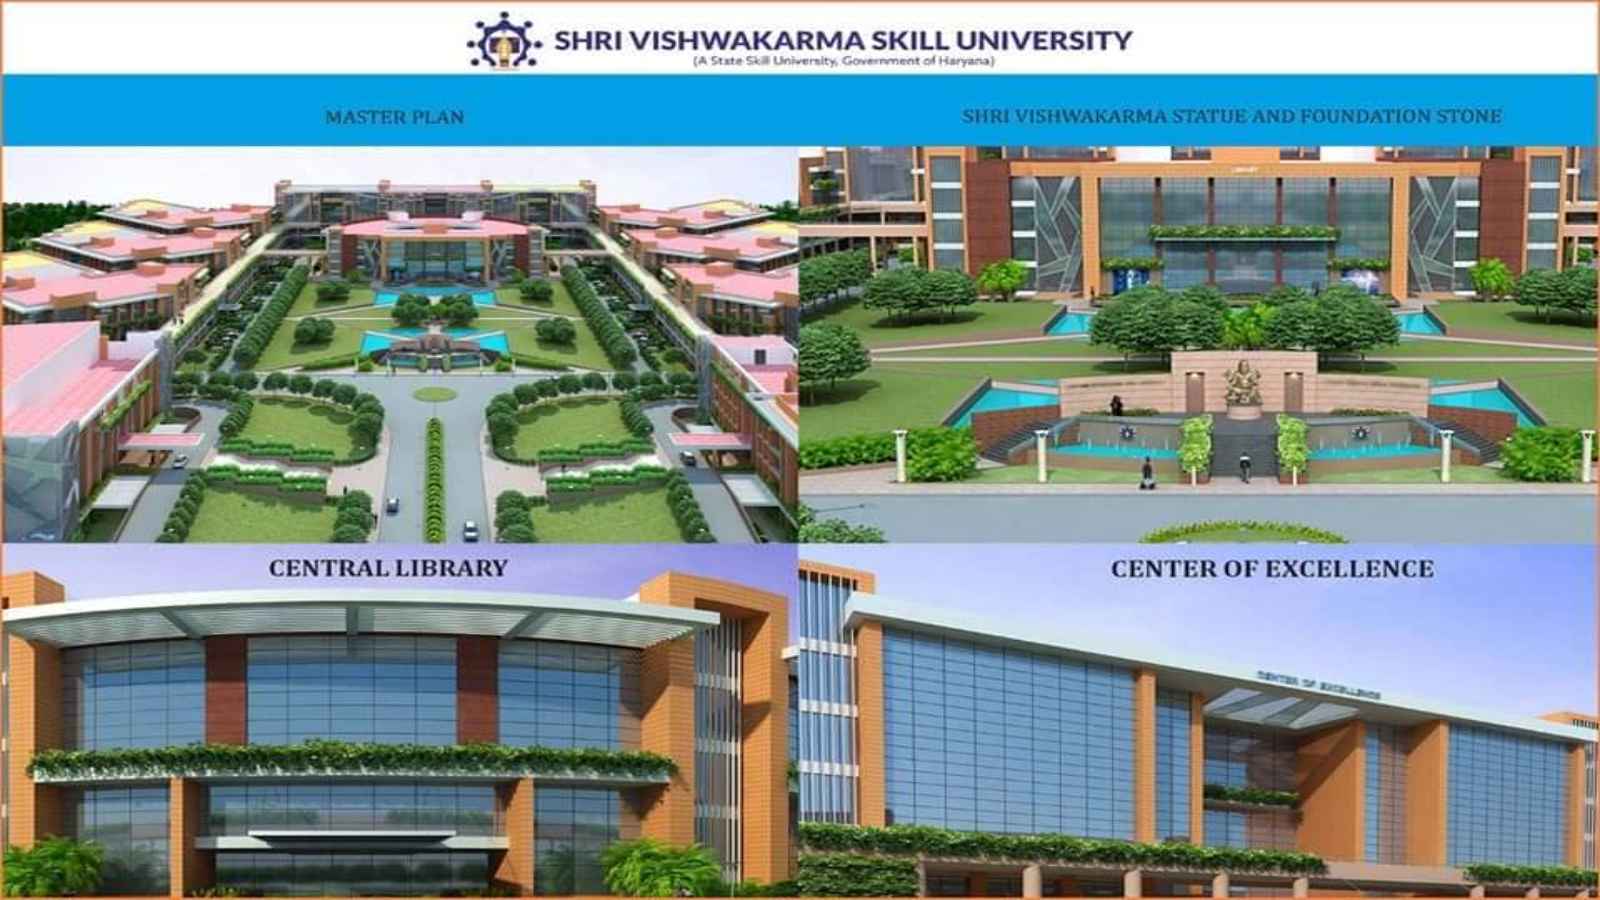 Shri Vishwakarma Skill University near completion, to be inaugurated by PM Modi, says VC